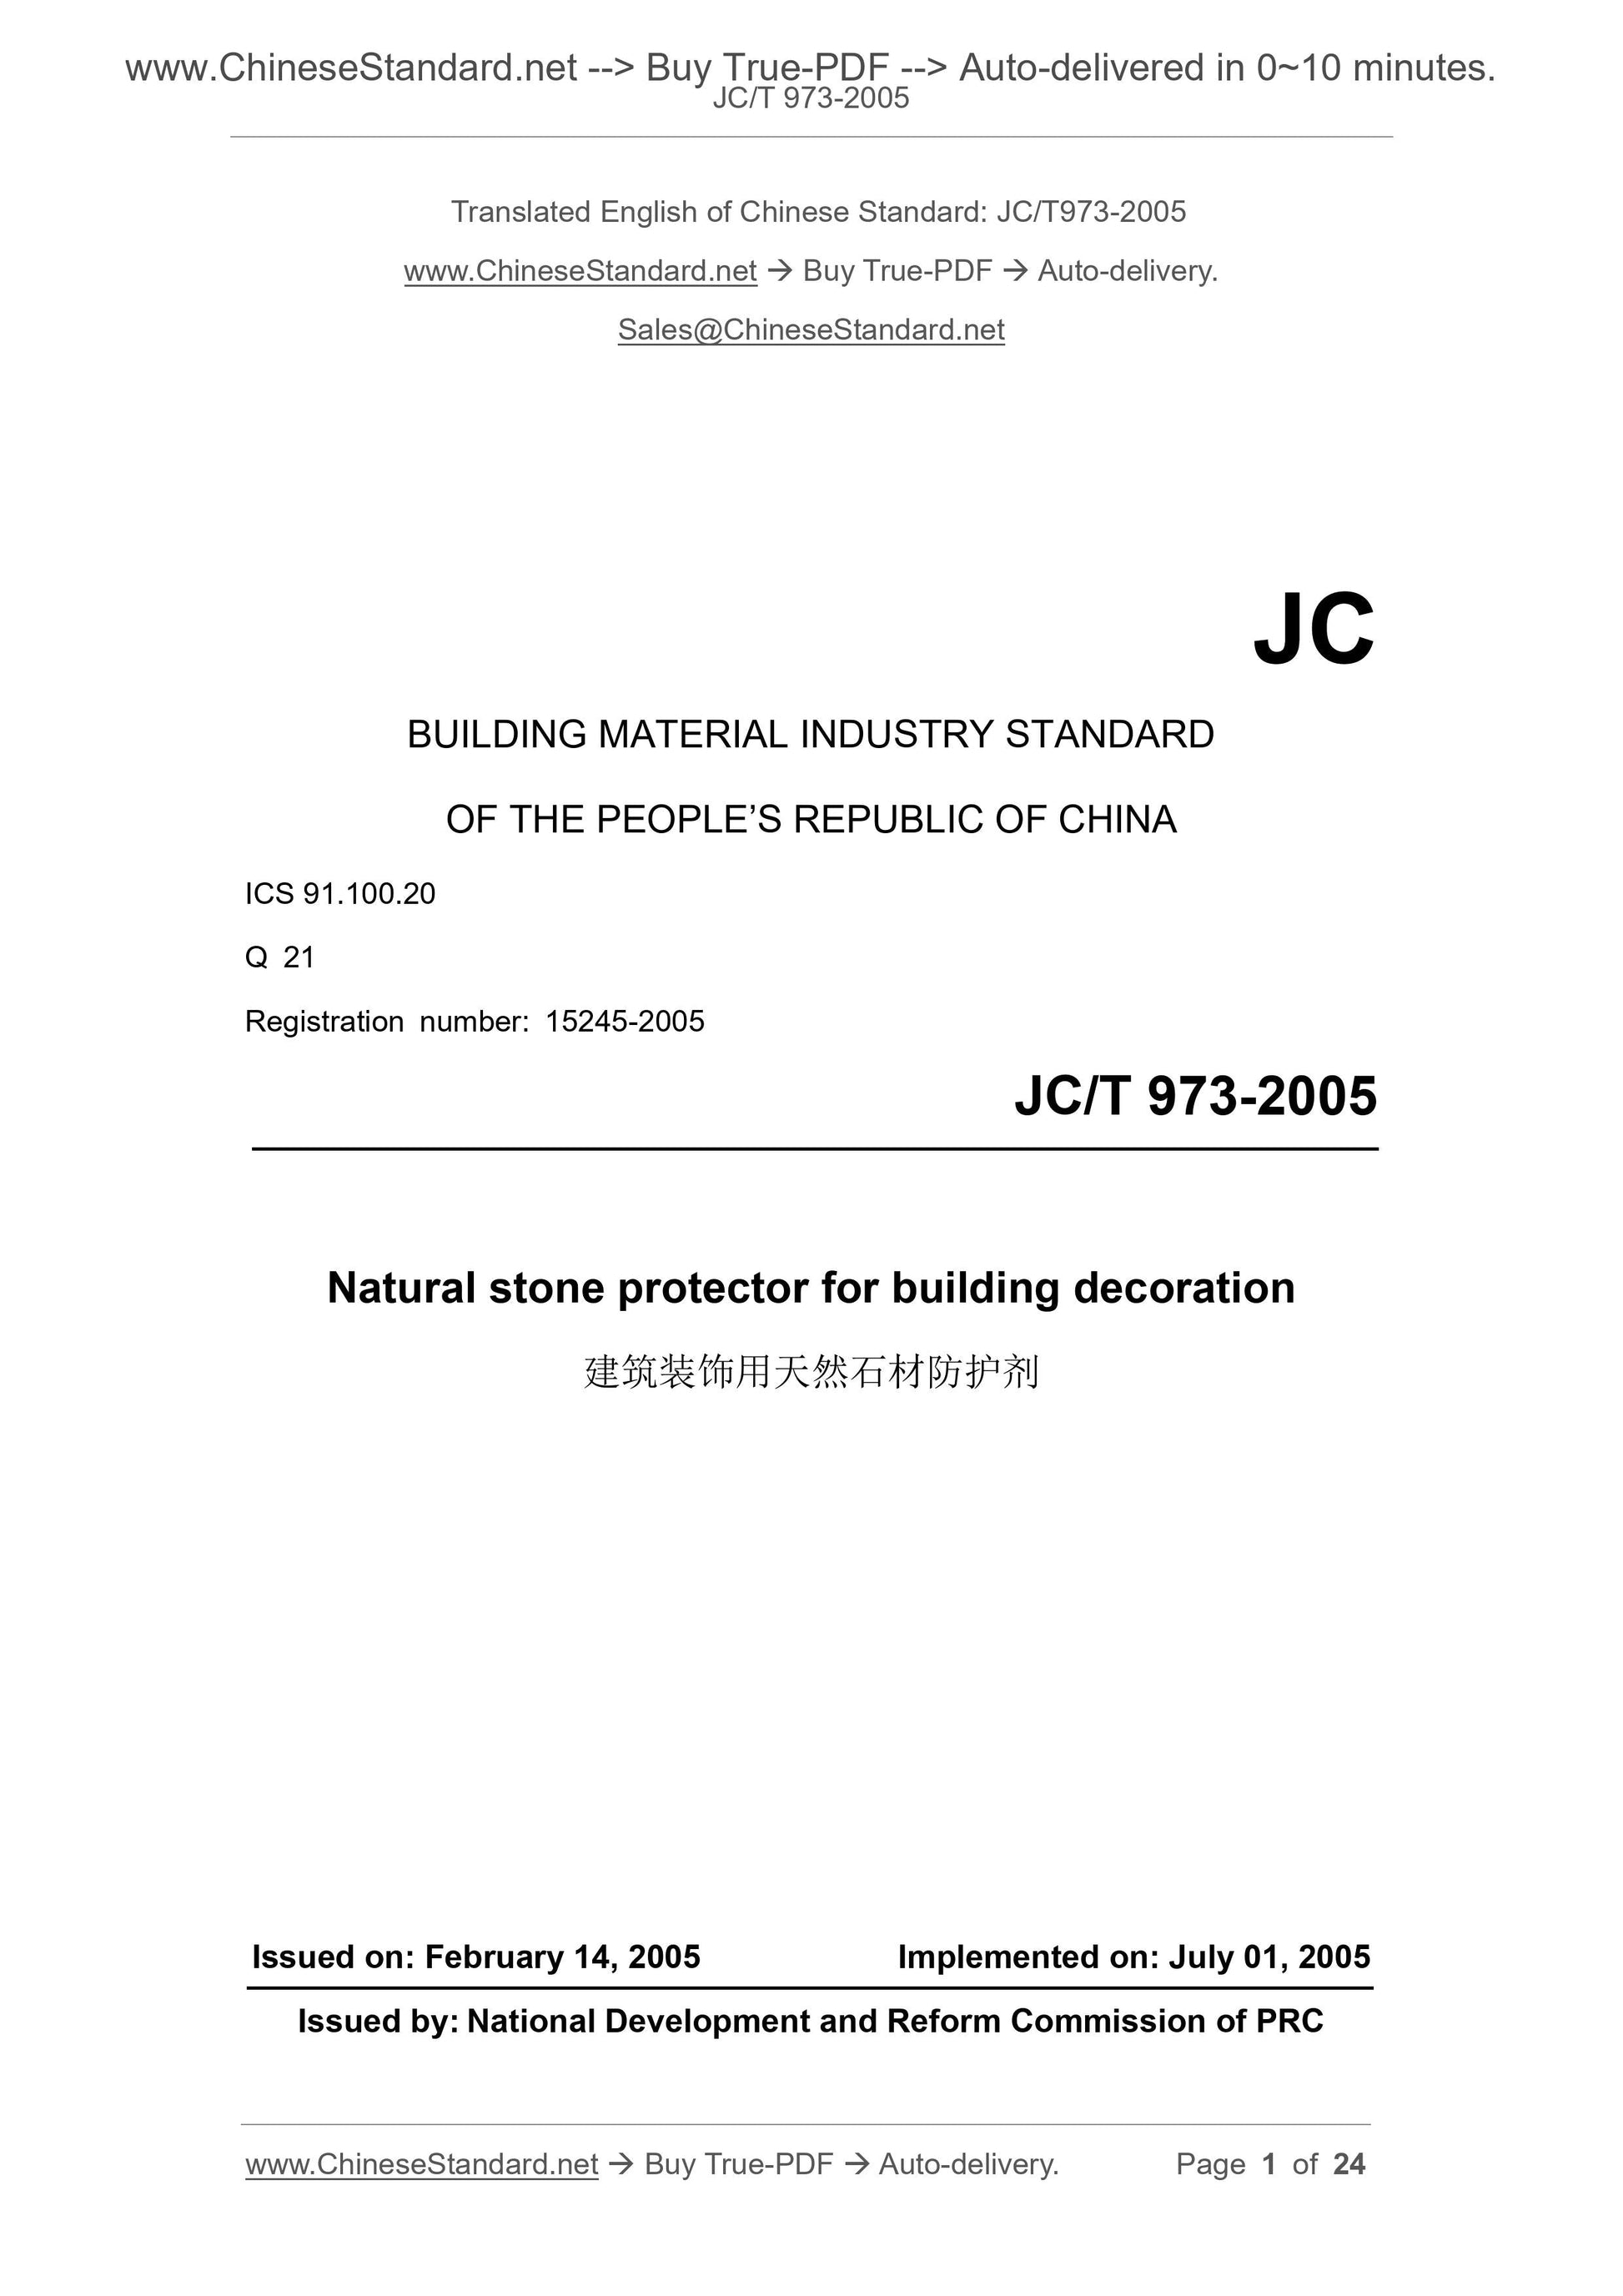 JC/T 973-2005 Page 1